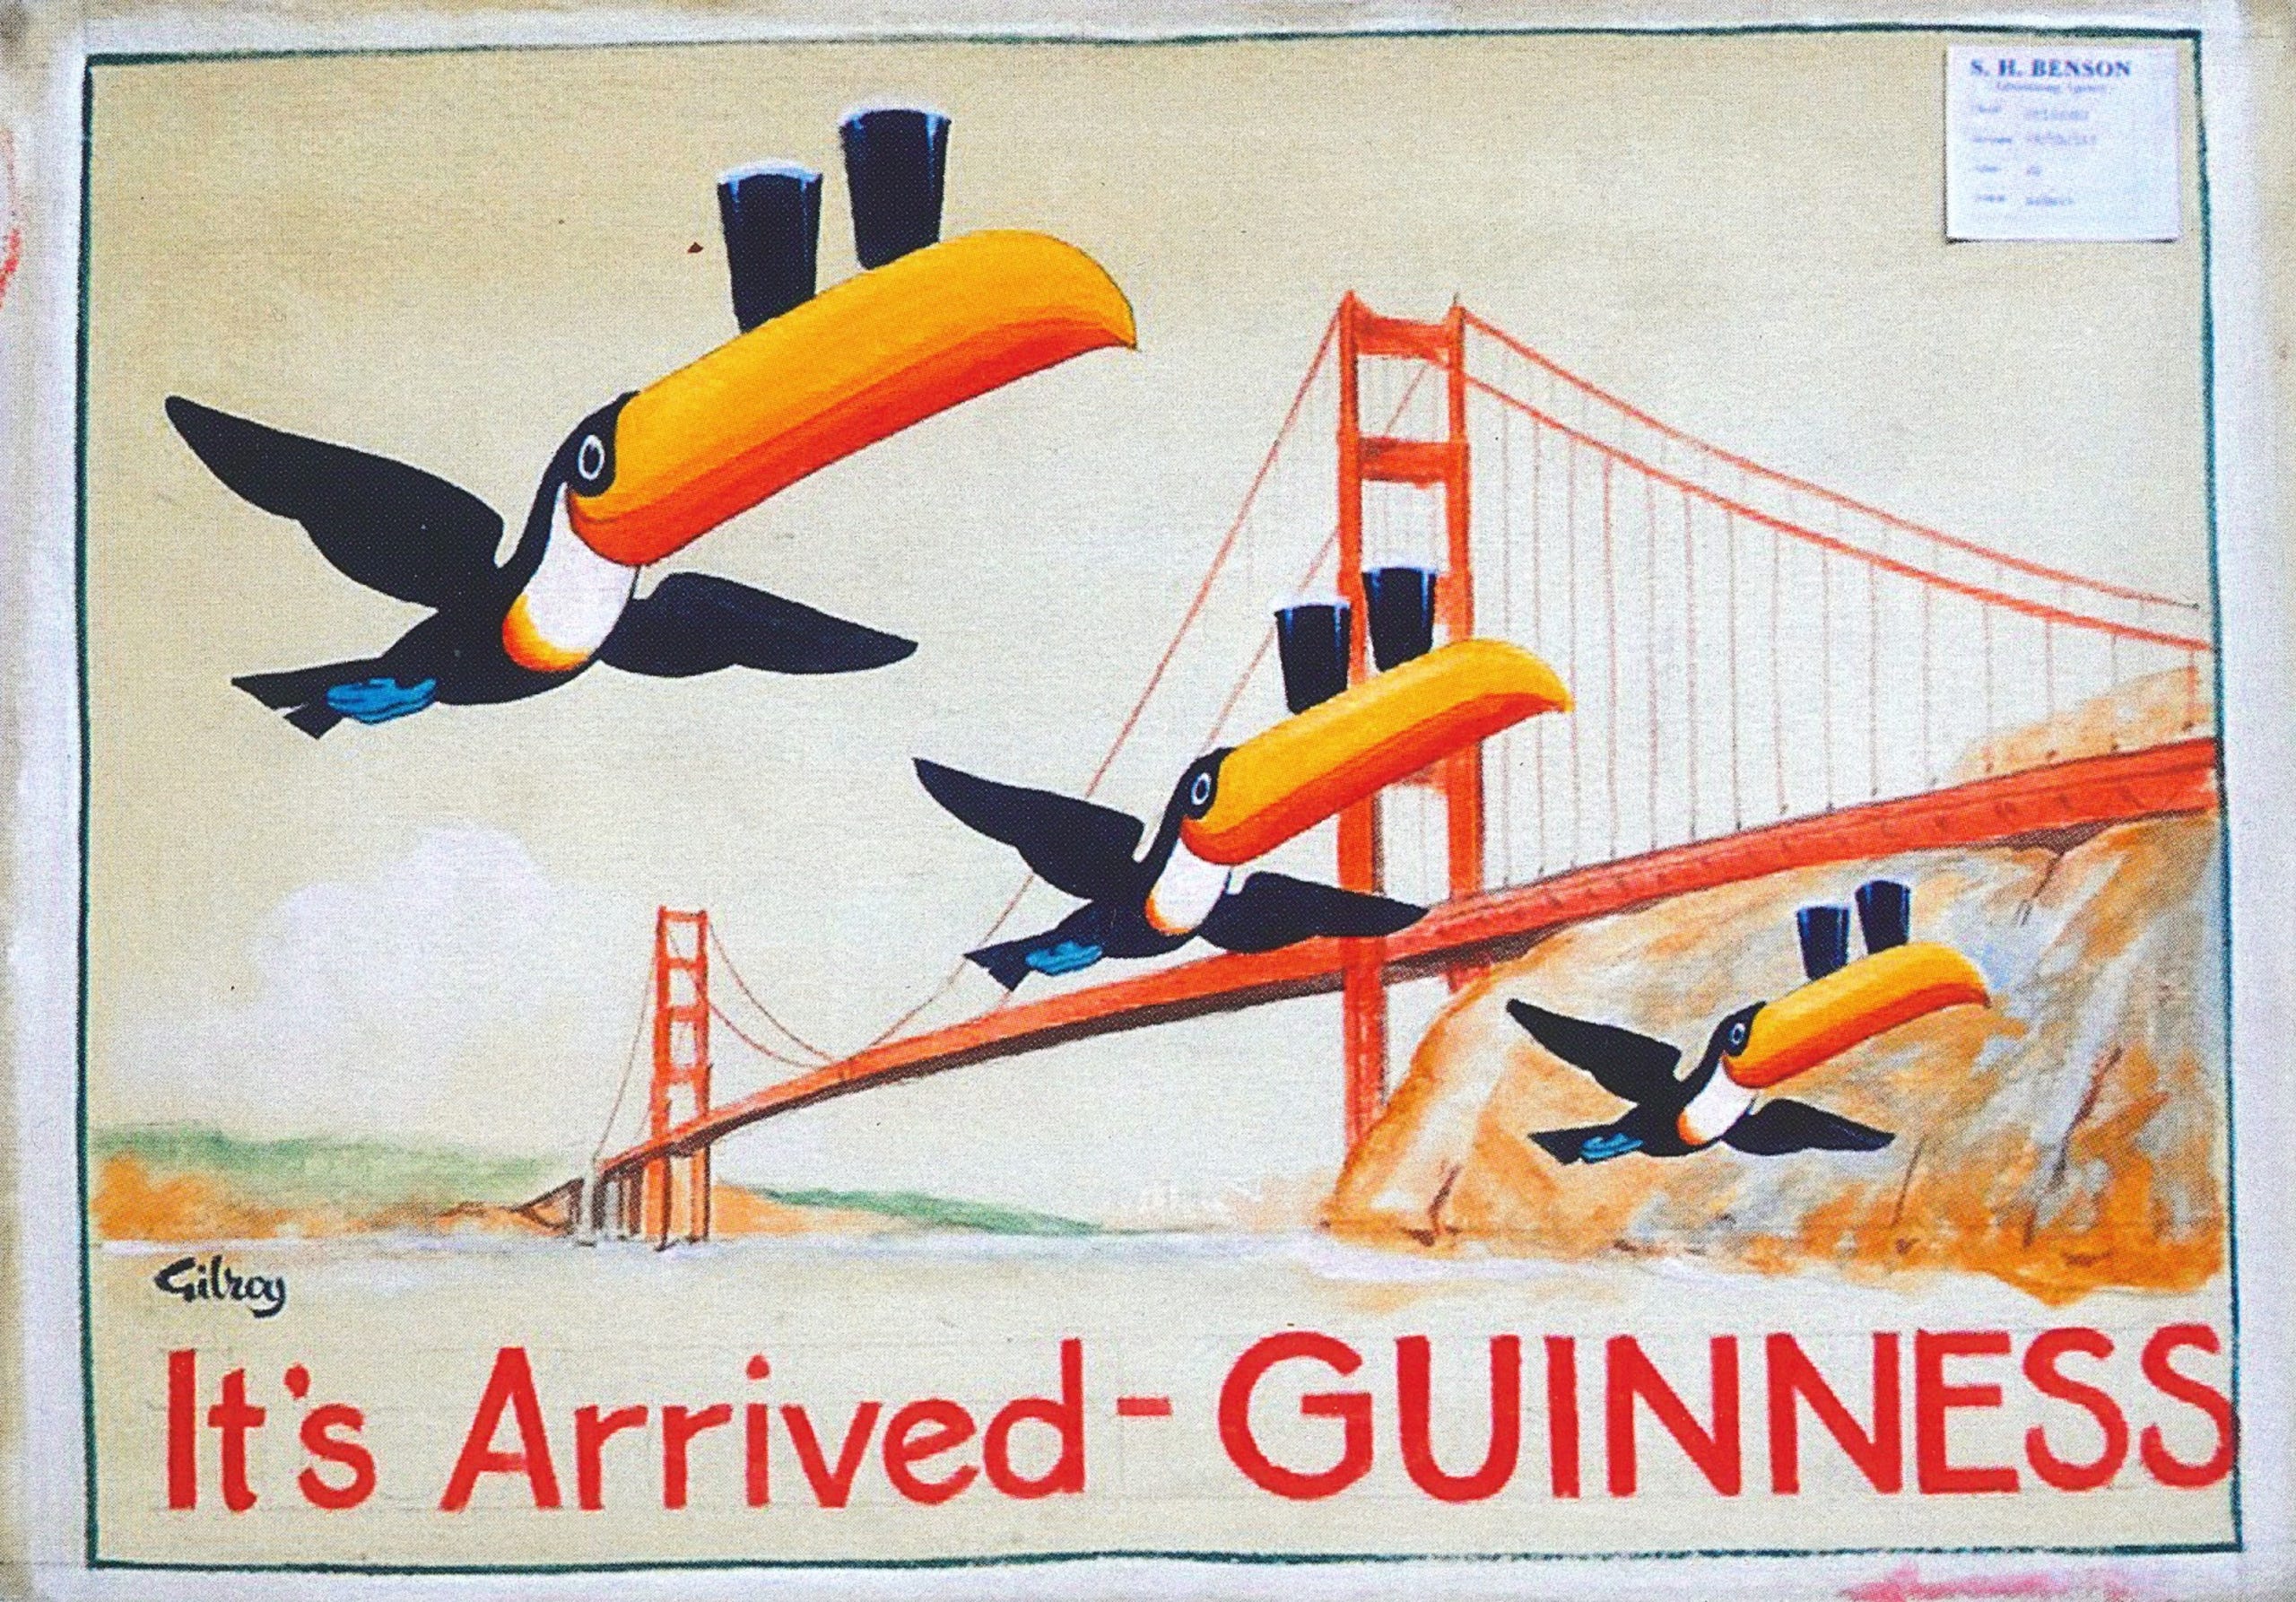 General 2560x1786 Guinness beer advertisements toucans vintage